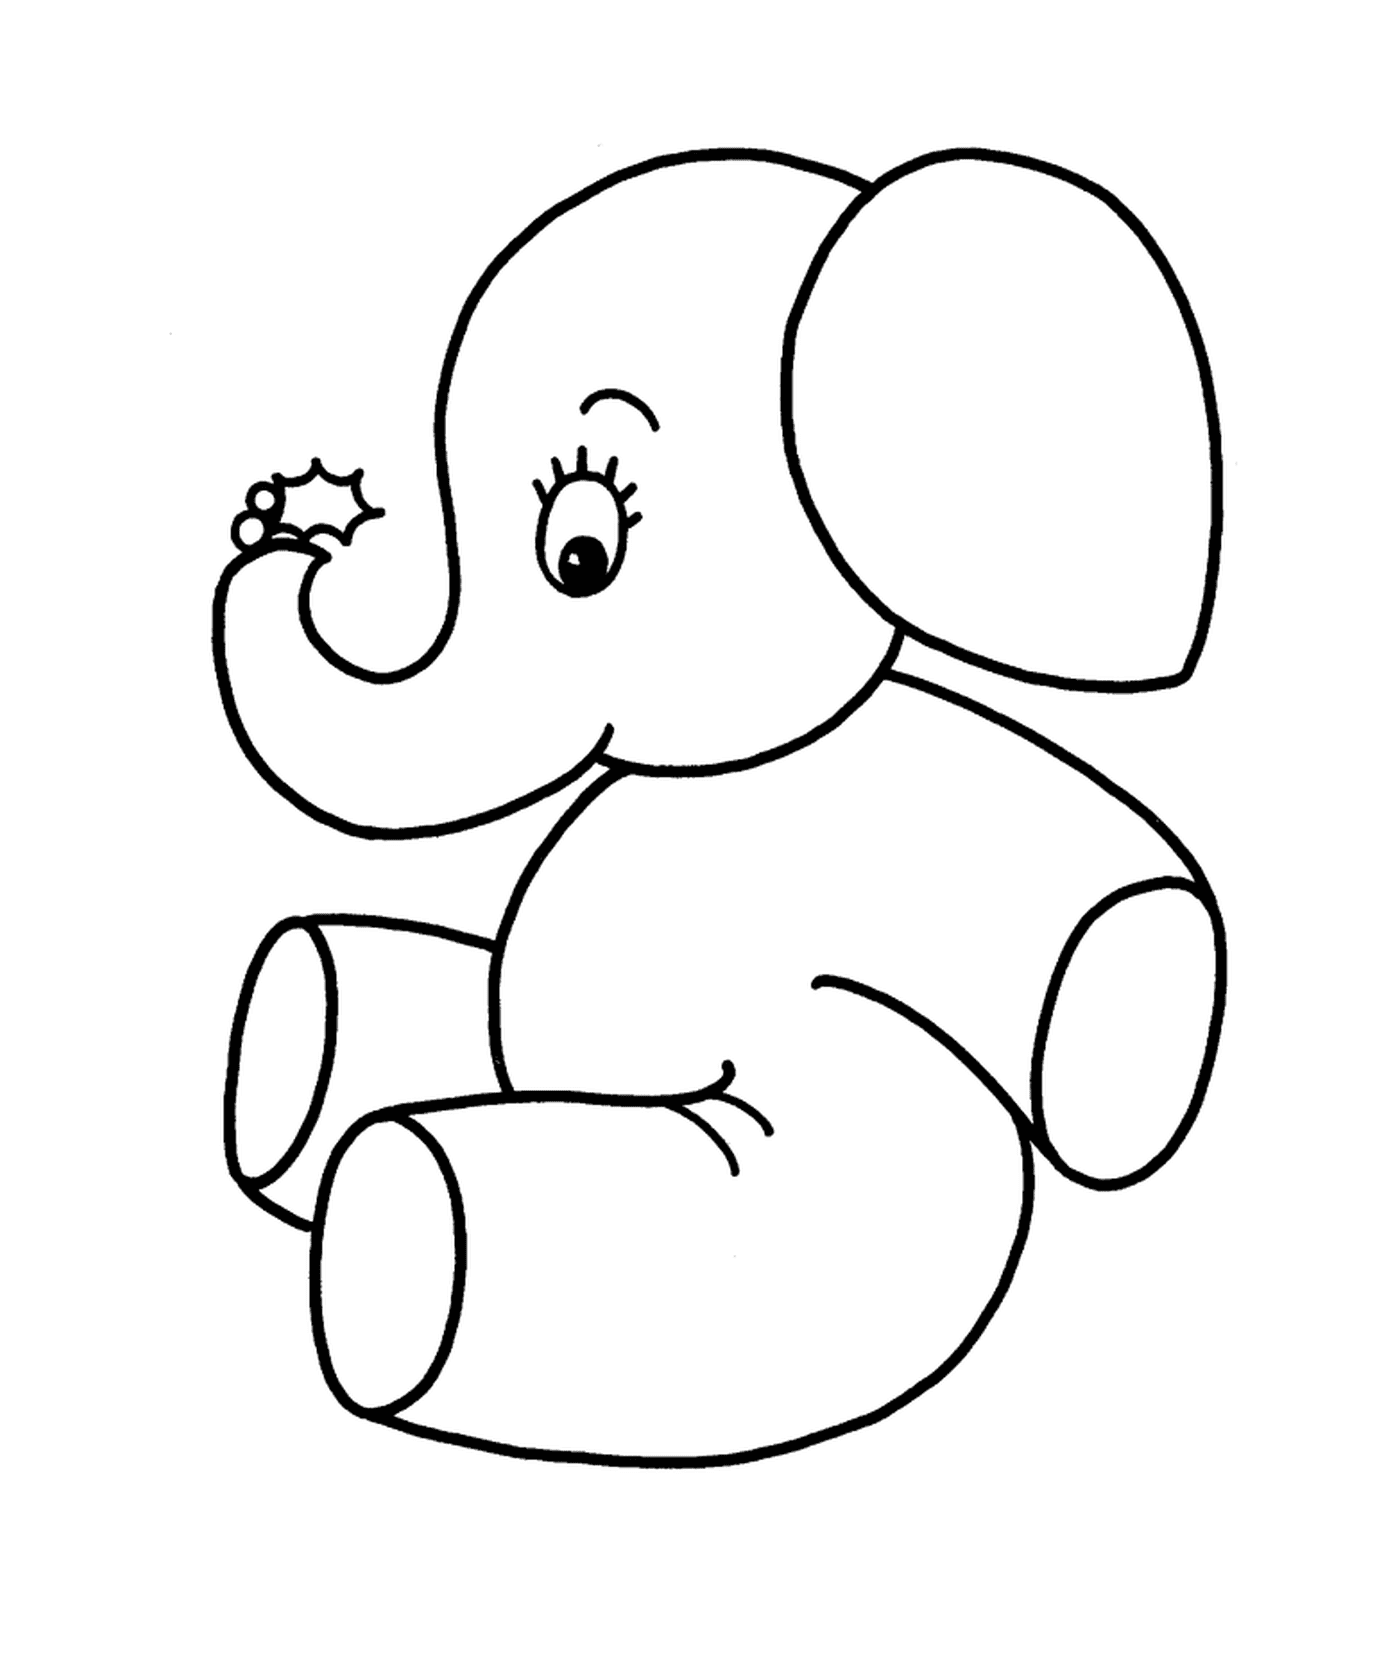  An elephant sitting 